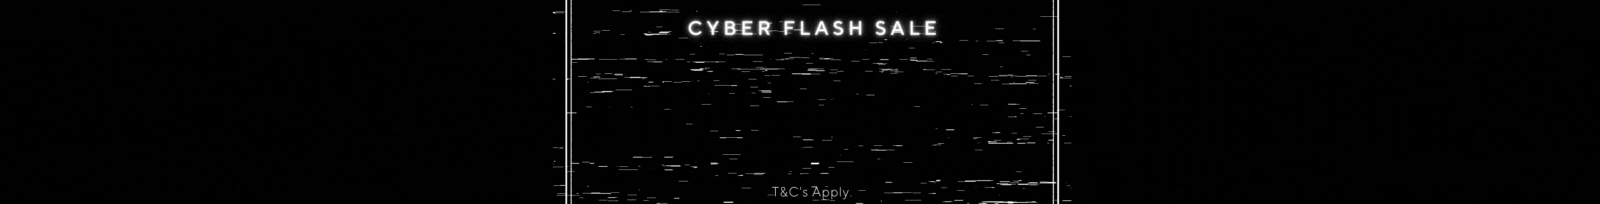 Cyberweb sale